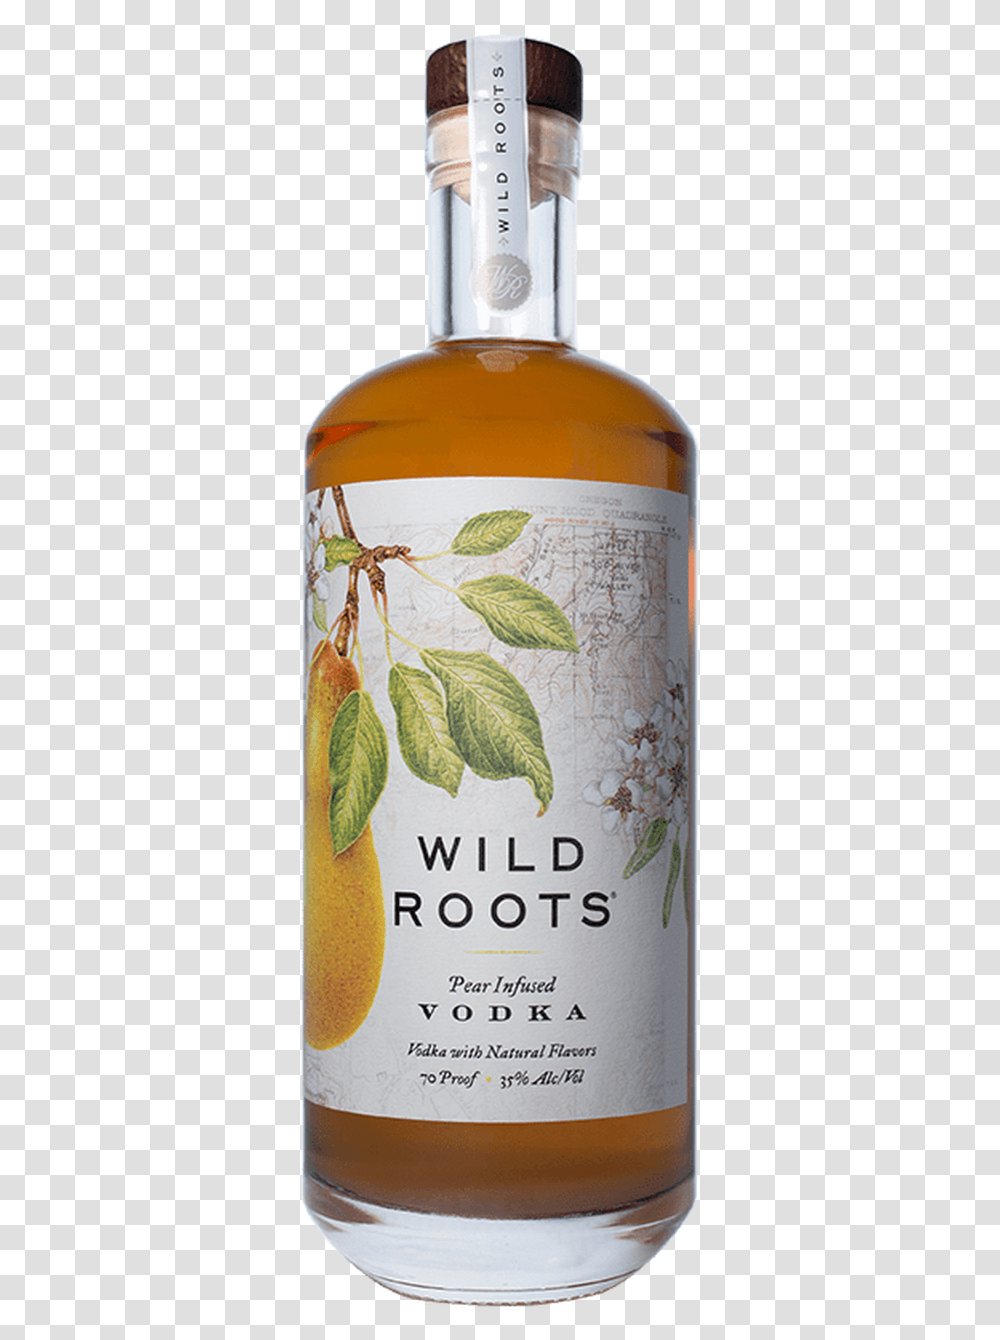 Wild Roots Vodka Pear Infused Natural Flavors 70pf Wild Roots Vodka, Bottle, Beverage, Drink, Alcohol Transparent Png